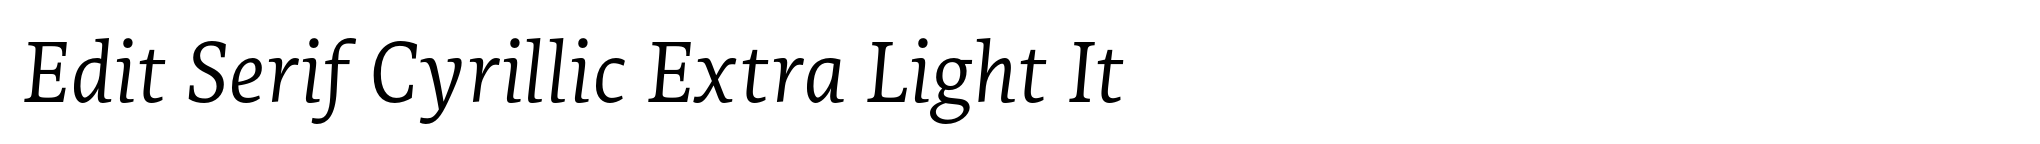 Edit Serif Cyrillic Extra Light It image